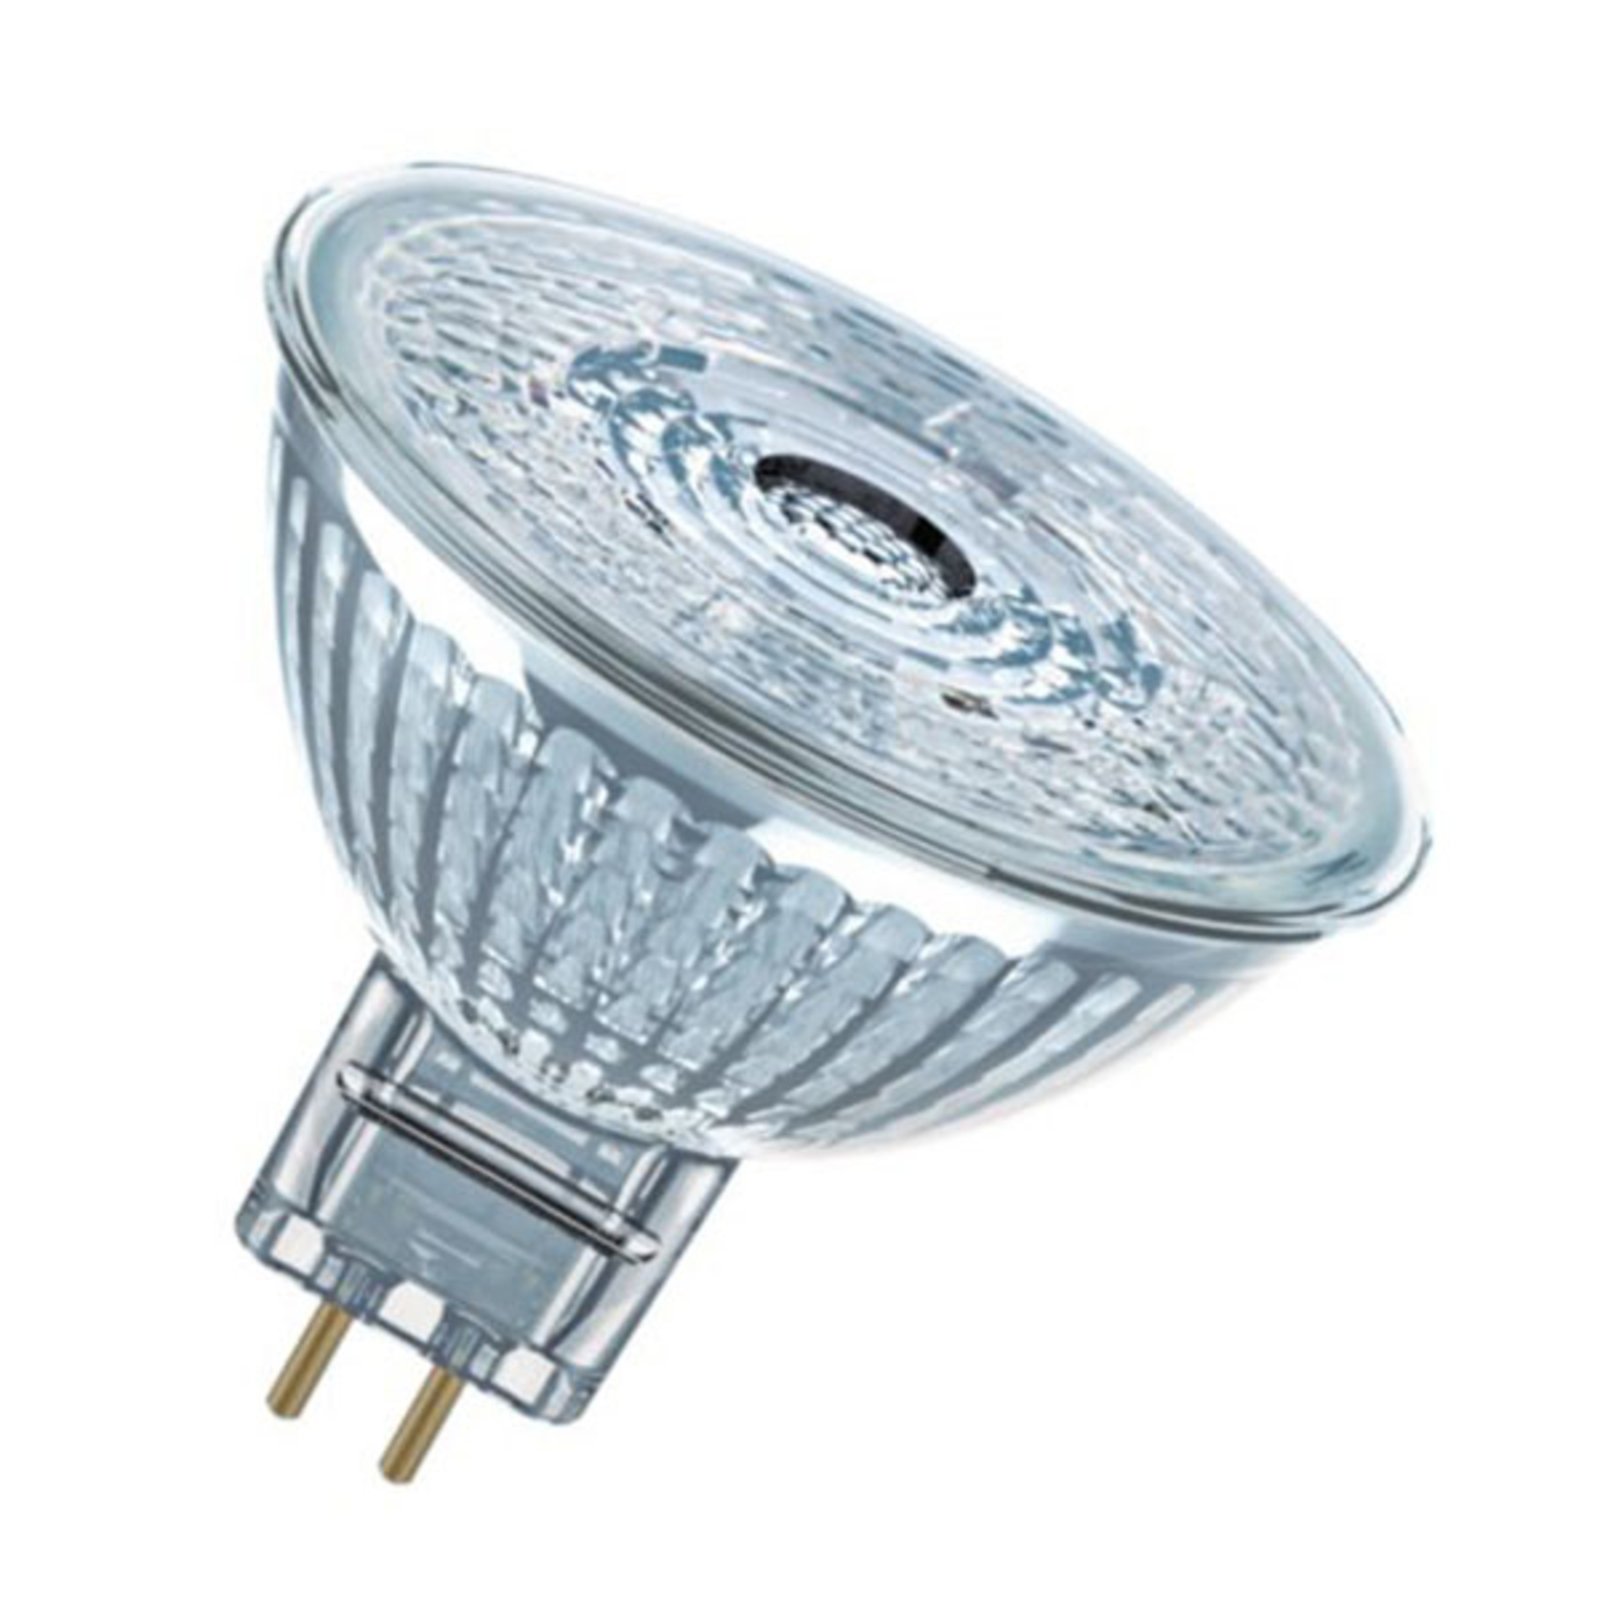 OSRAM Star reflector LED bulb GU5.3 8 W cool white